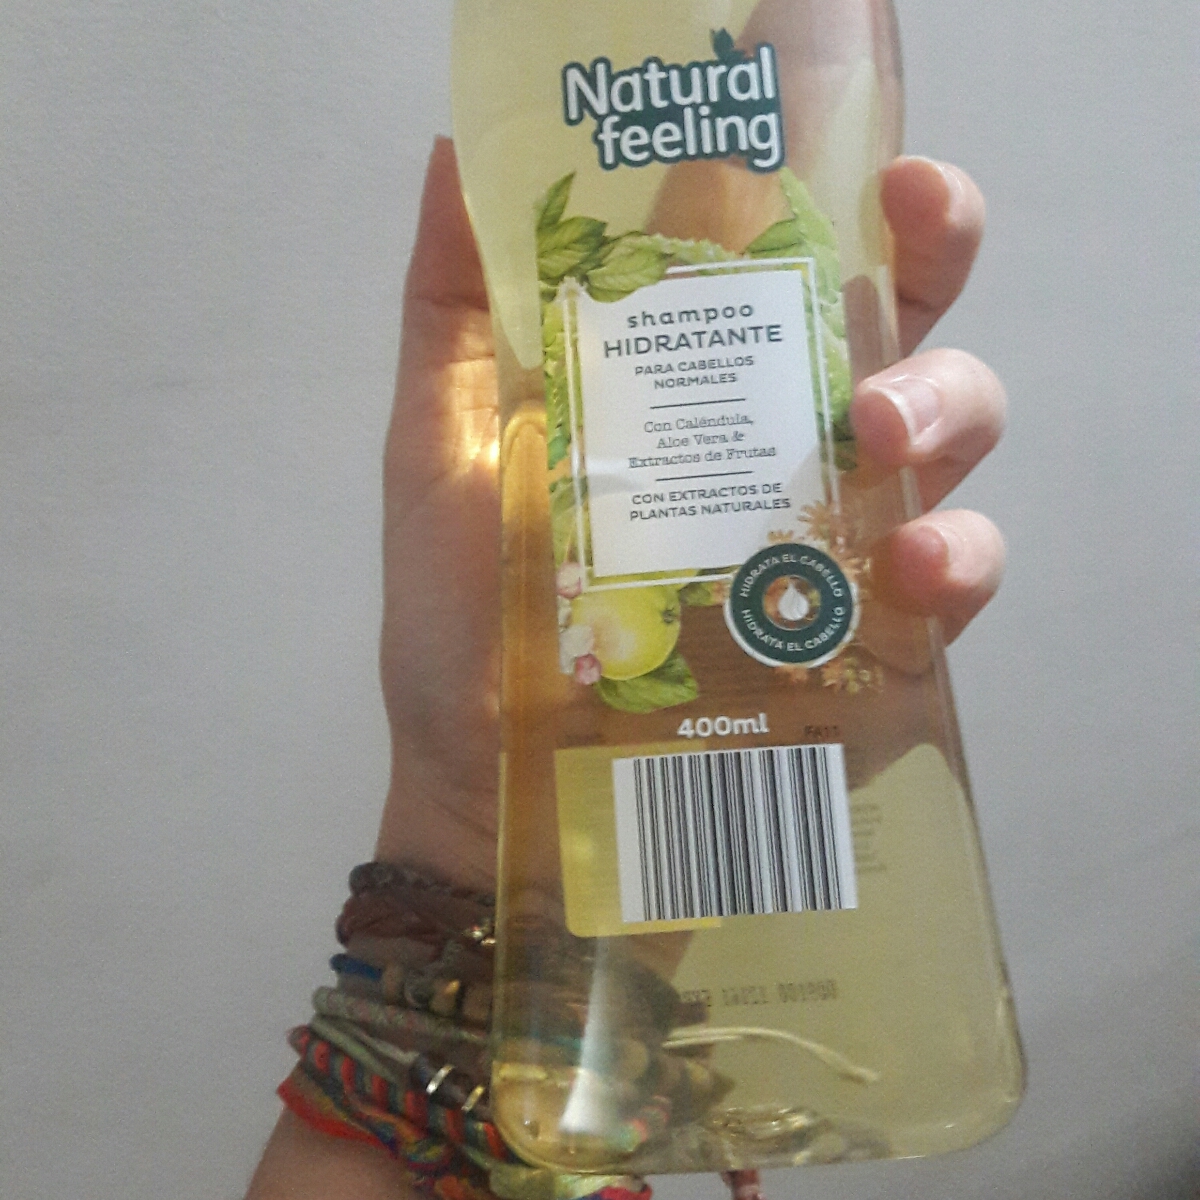 Natural feeling Shampoo Hidratante Review